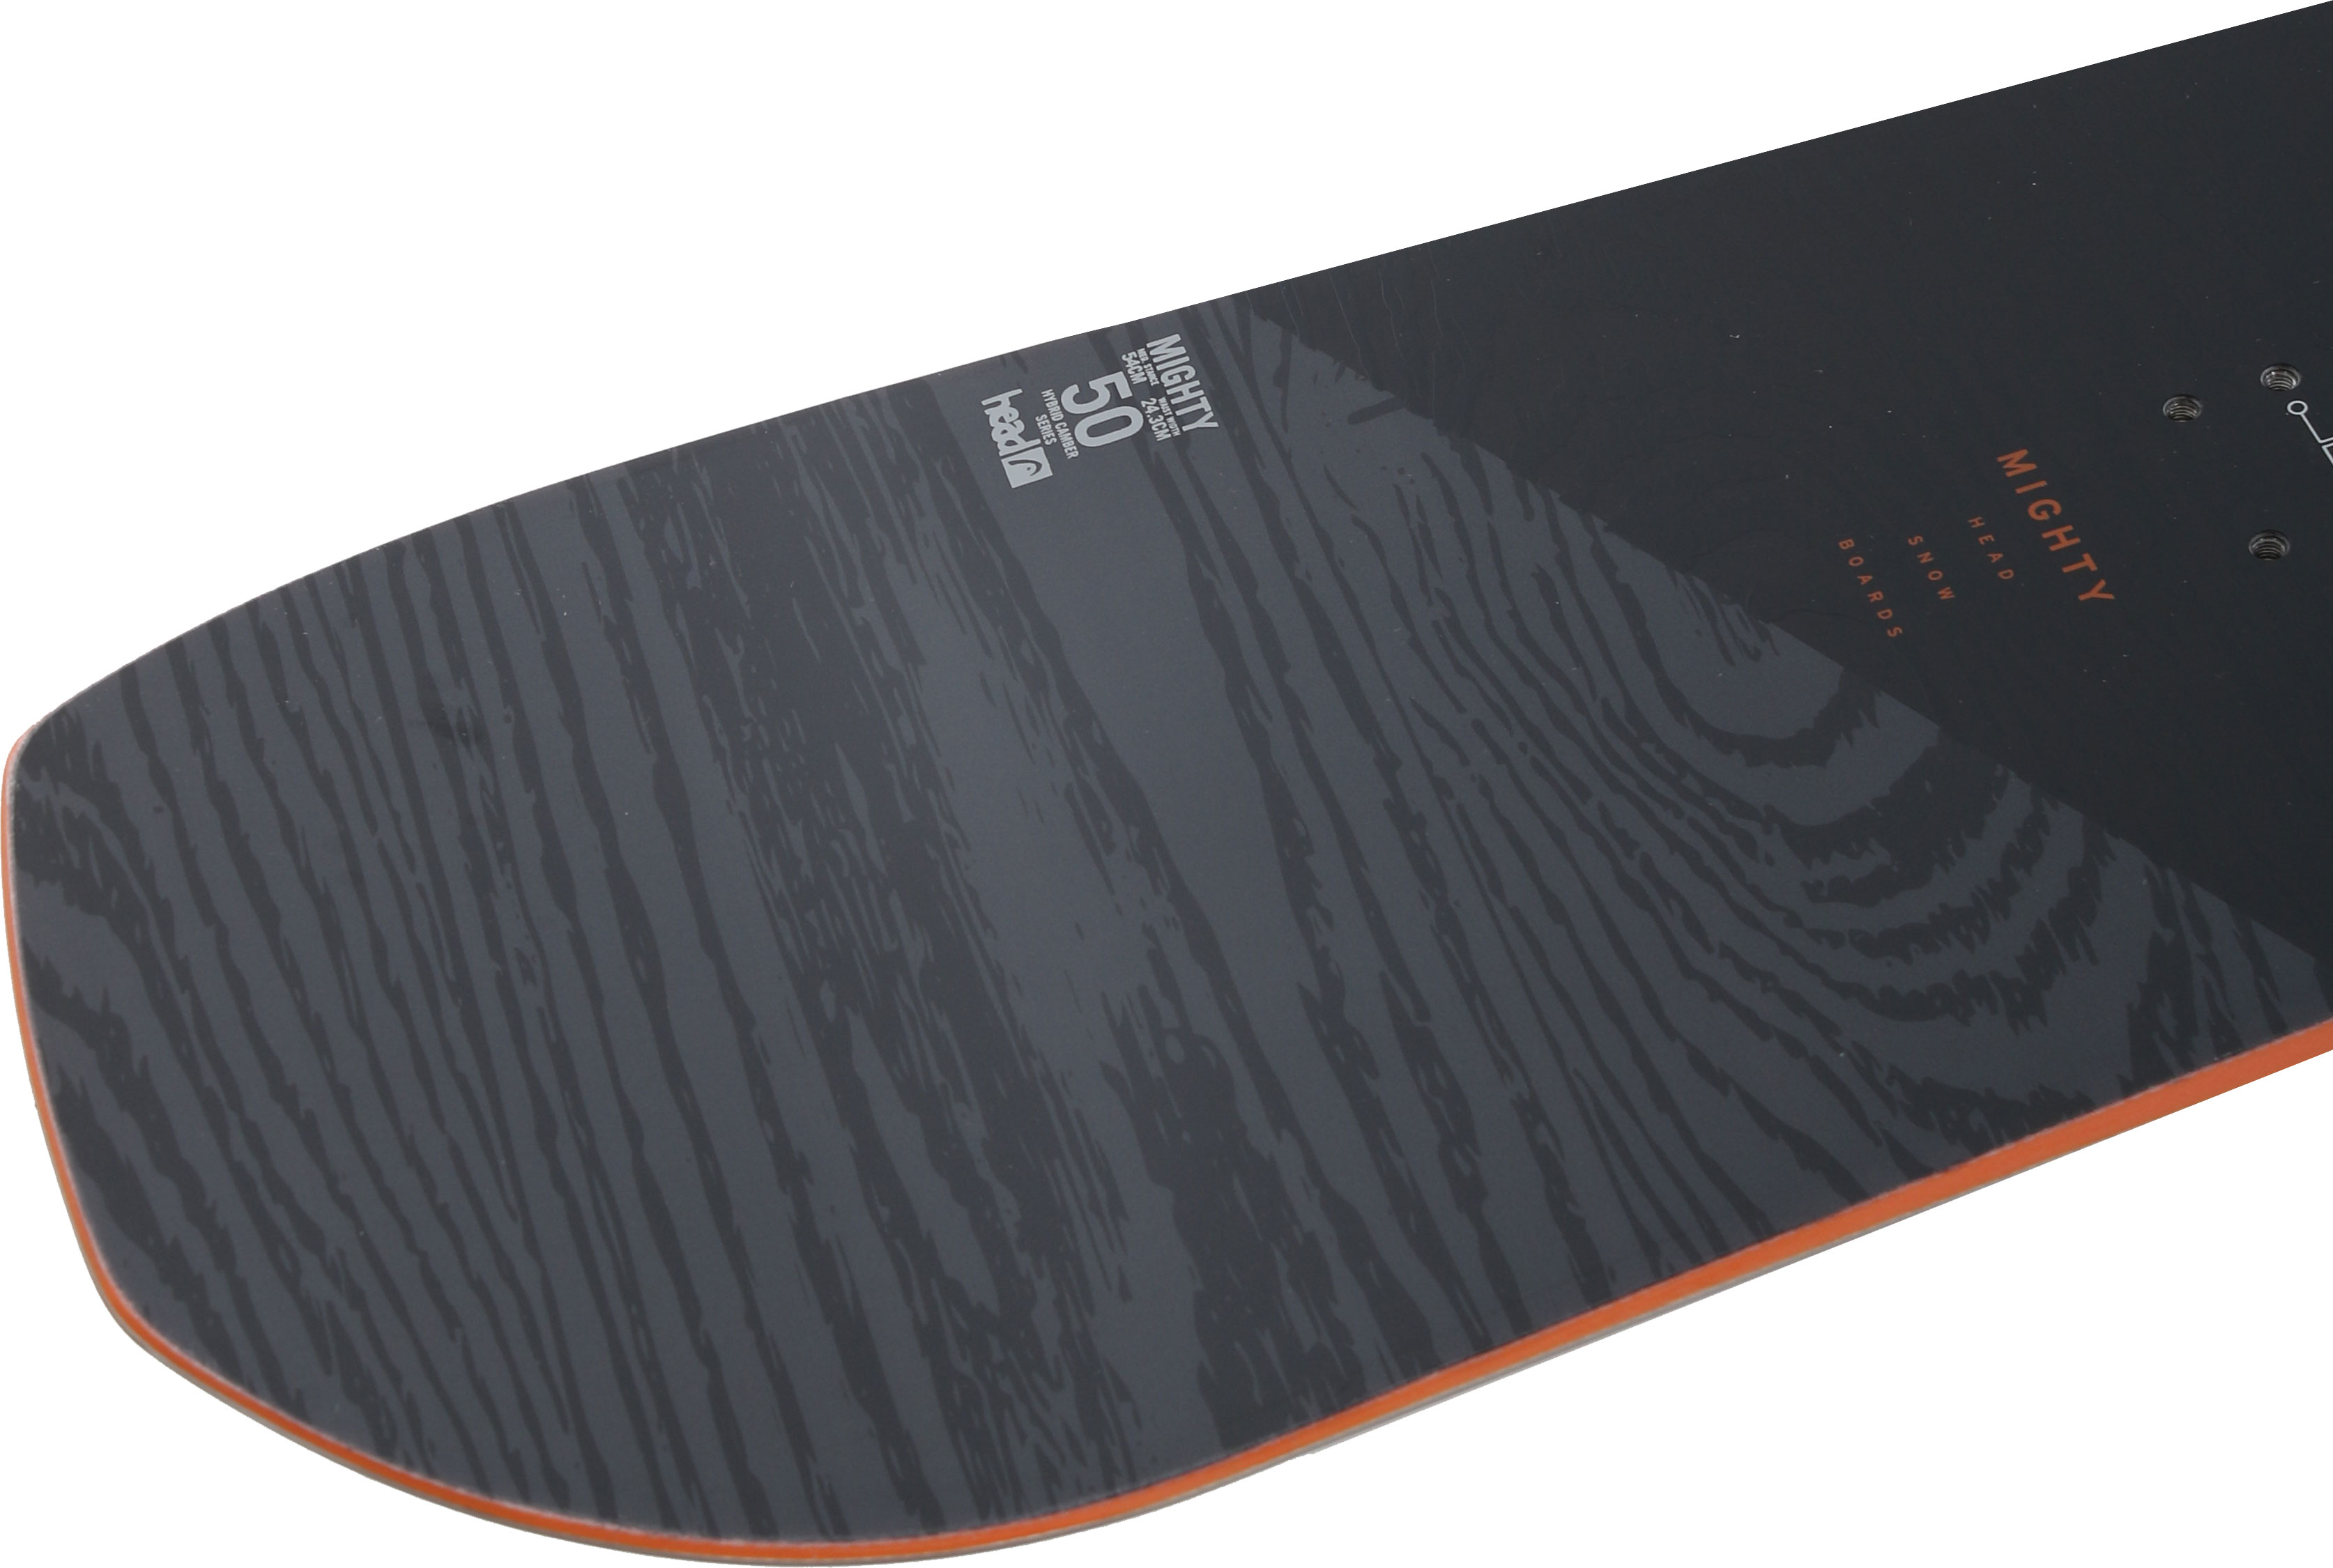 HEAD Snowboard Set Snowboardset MIGHTY 153 2022 inkl. NX ONE black Snowboard Set